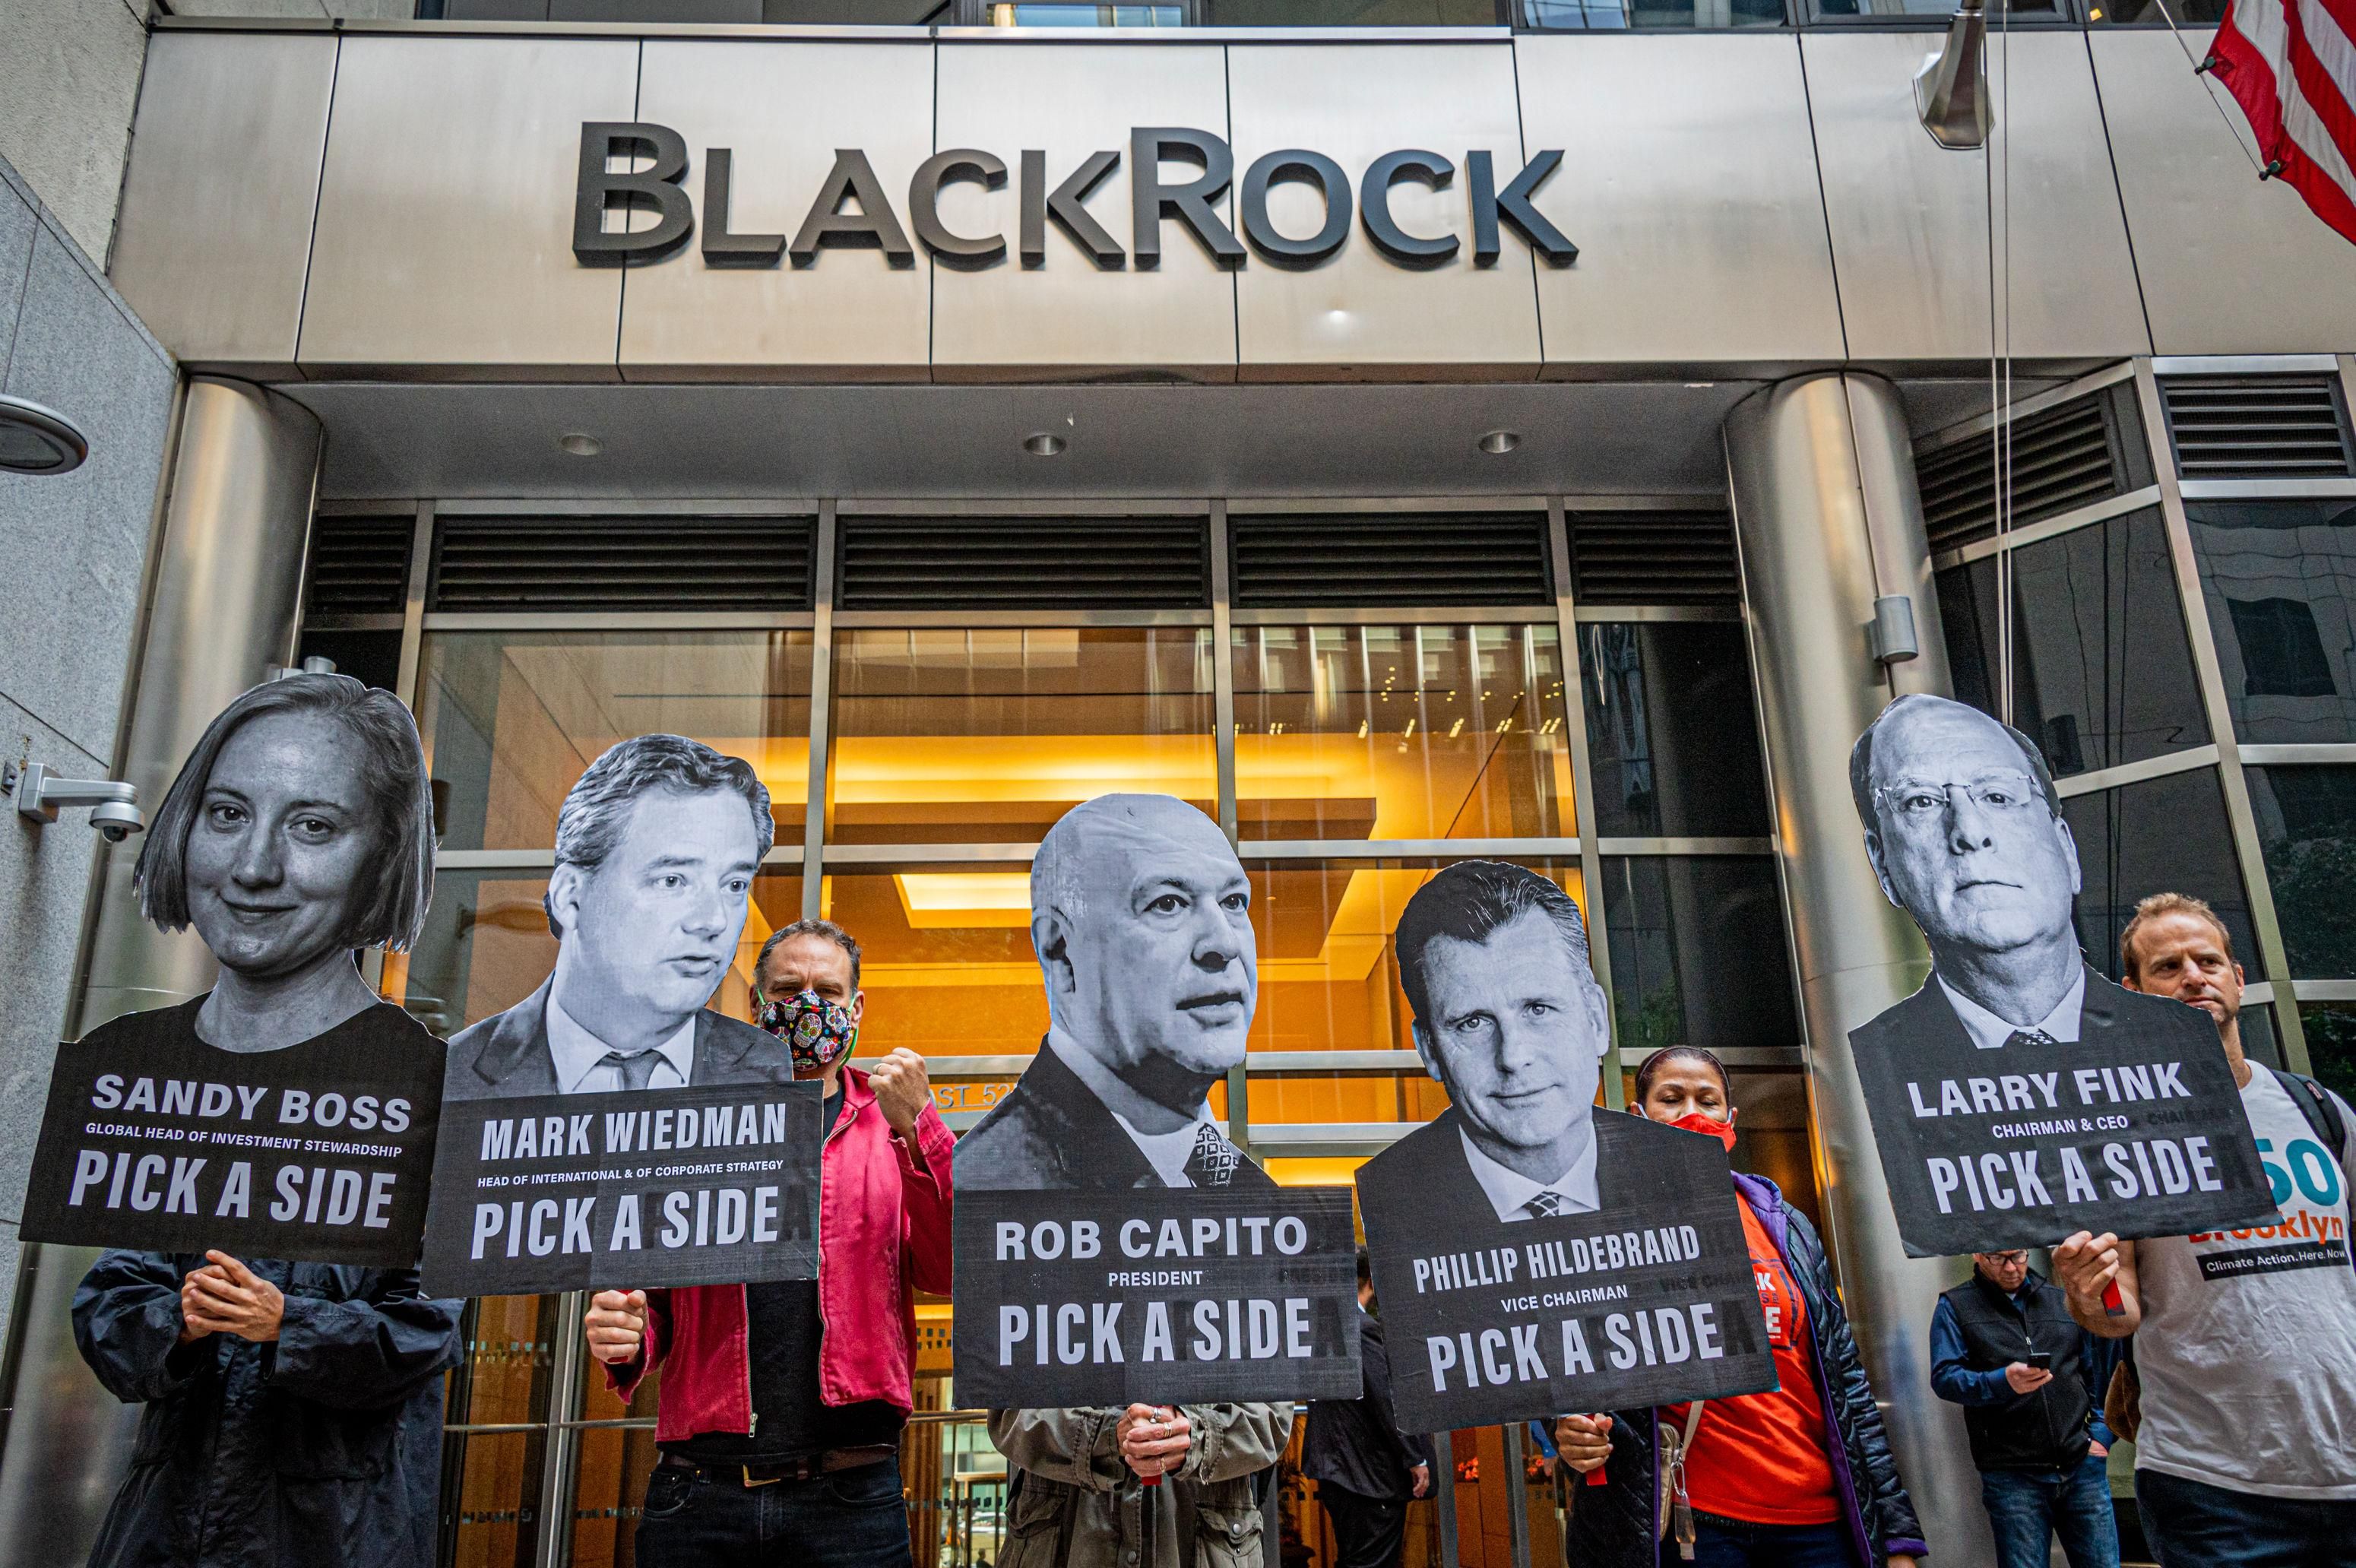 Blackrock protest